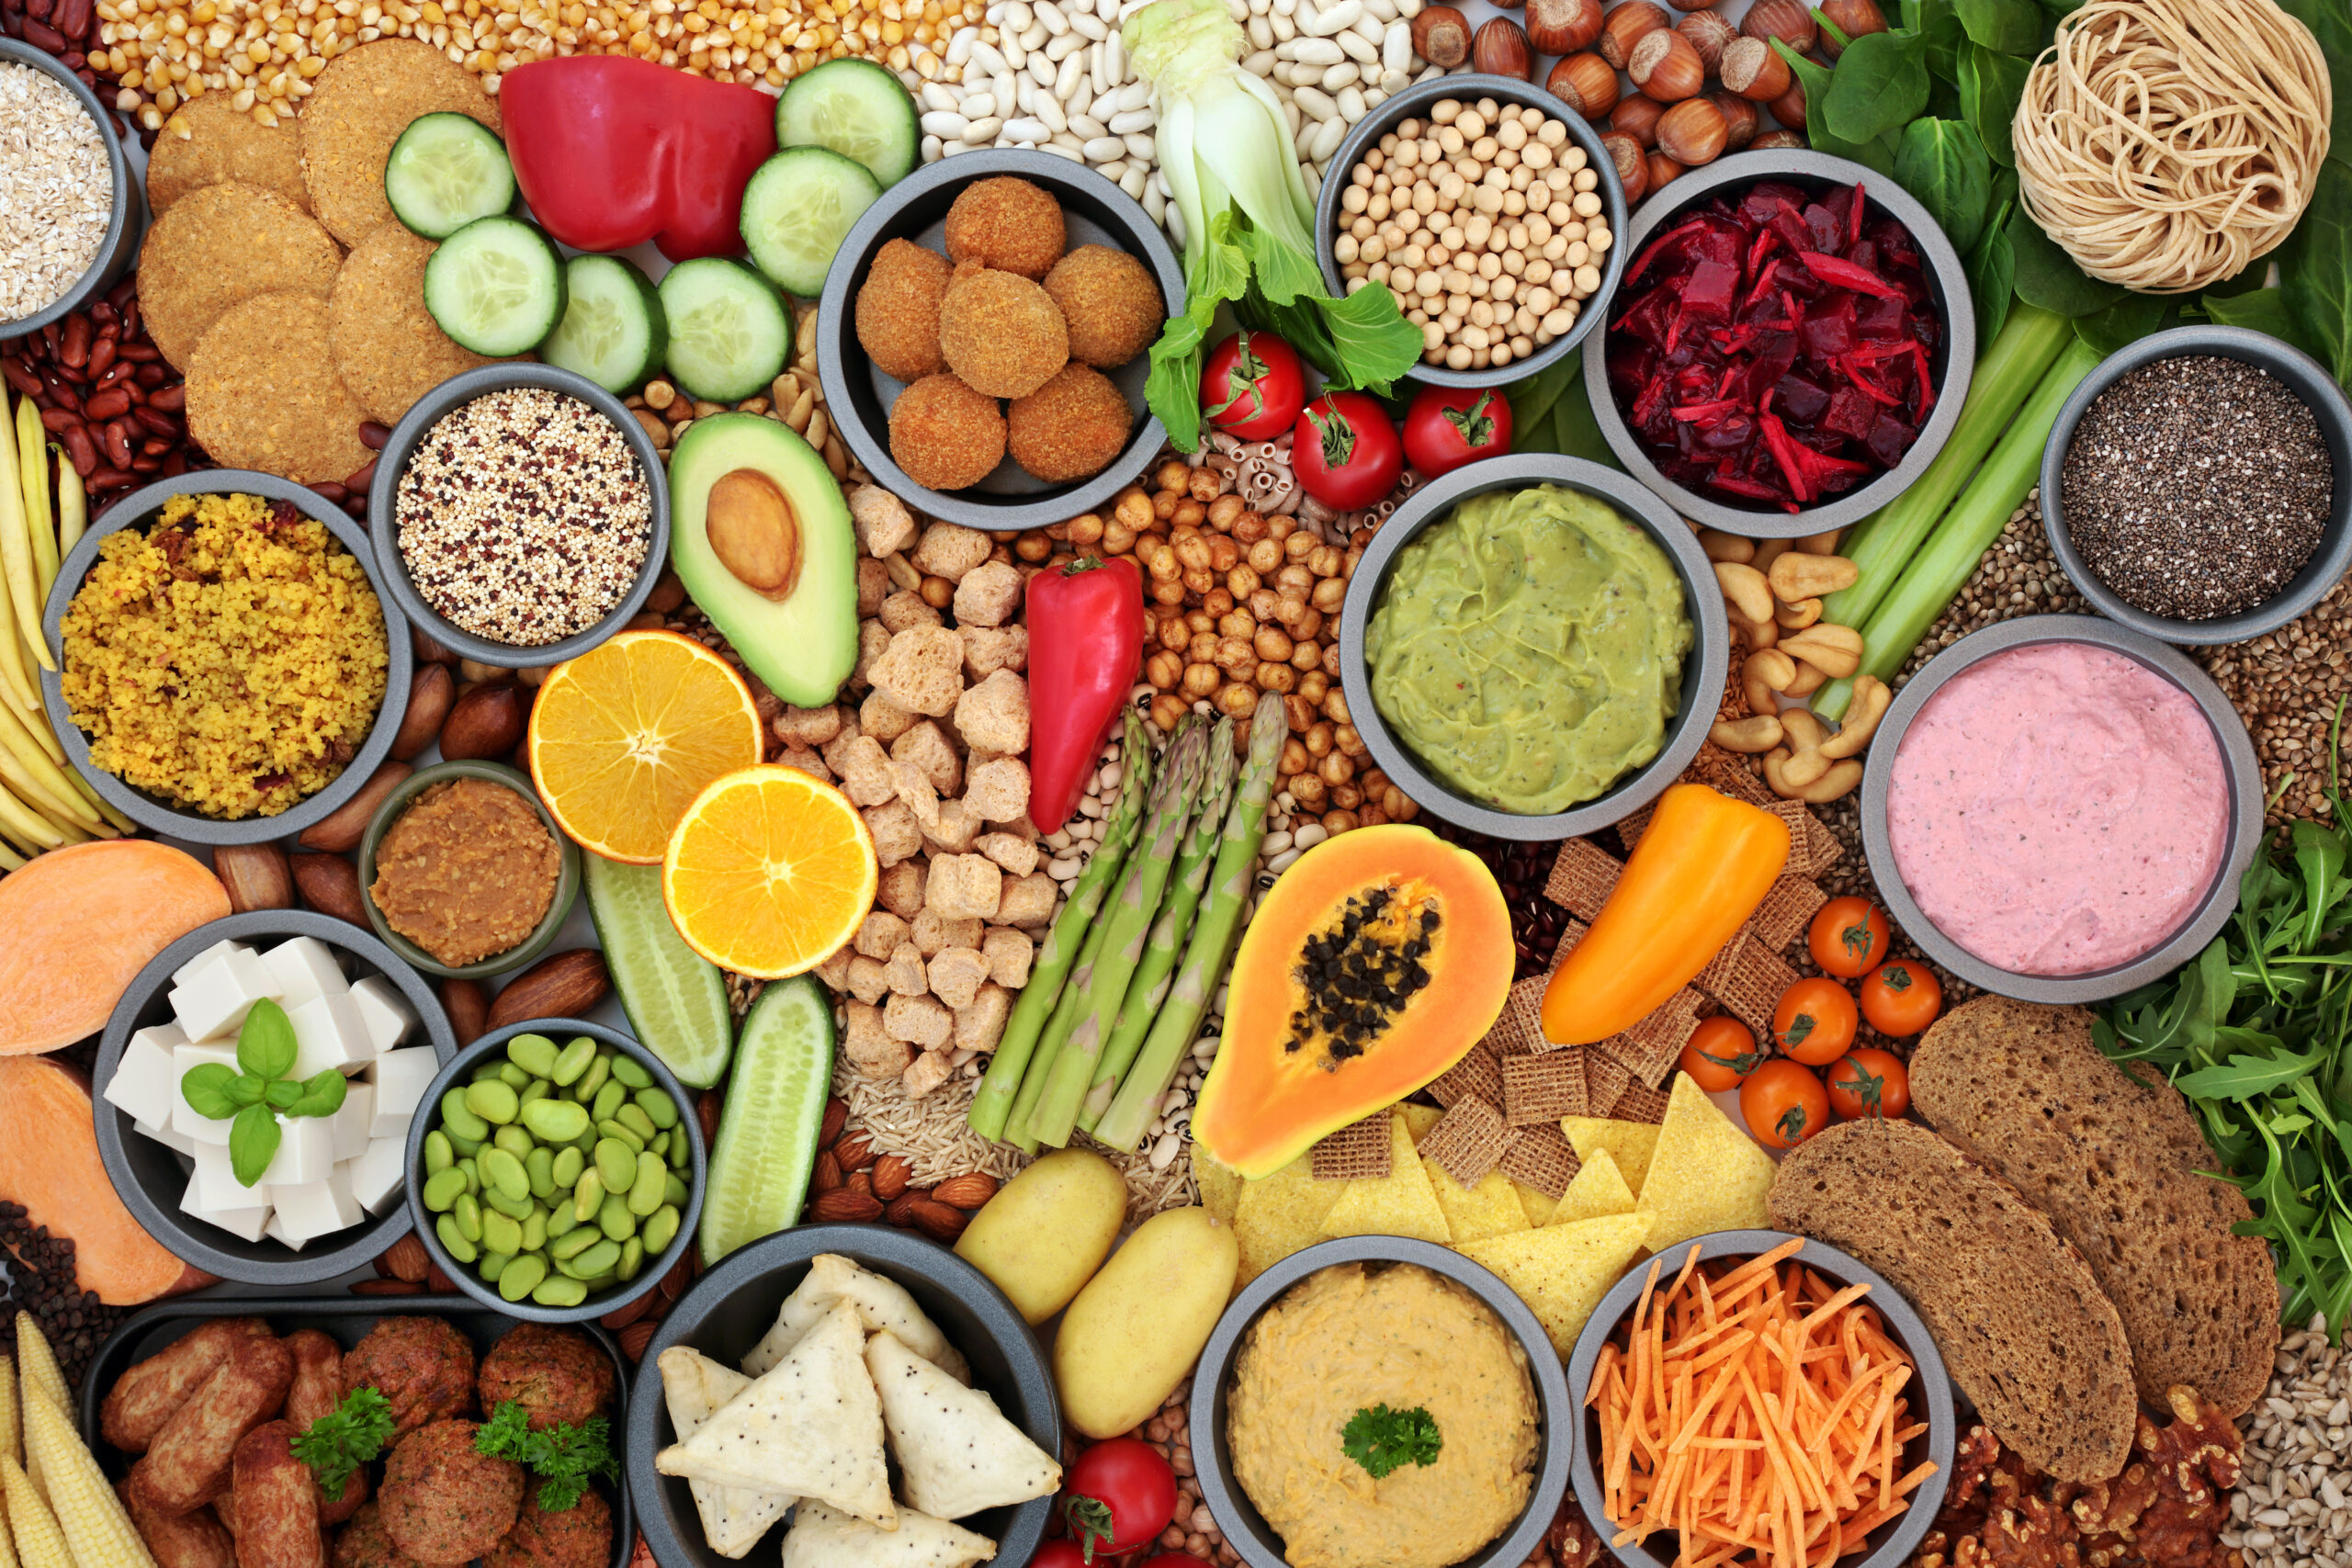 Plant-Based Vegan Food, vegetables, fruit, tofu, cereal, legumes, and dips.